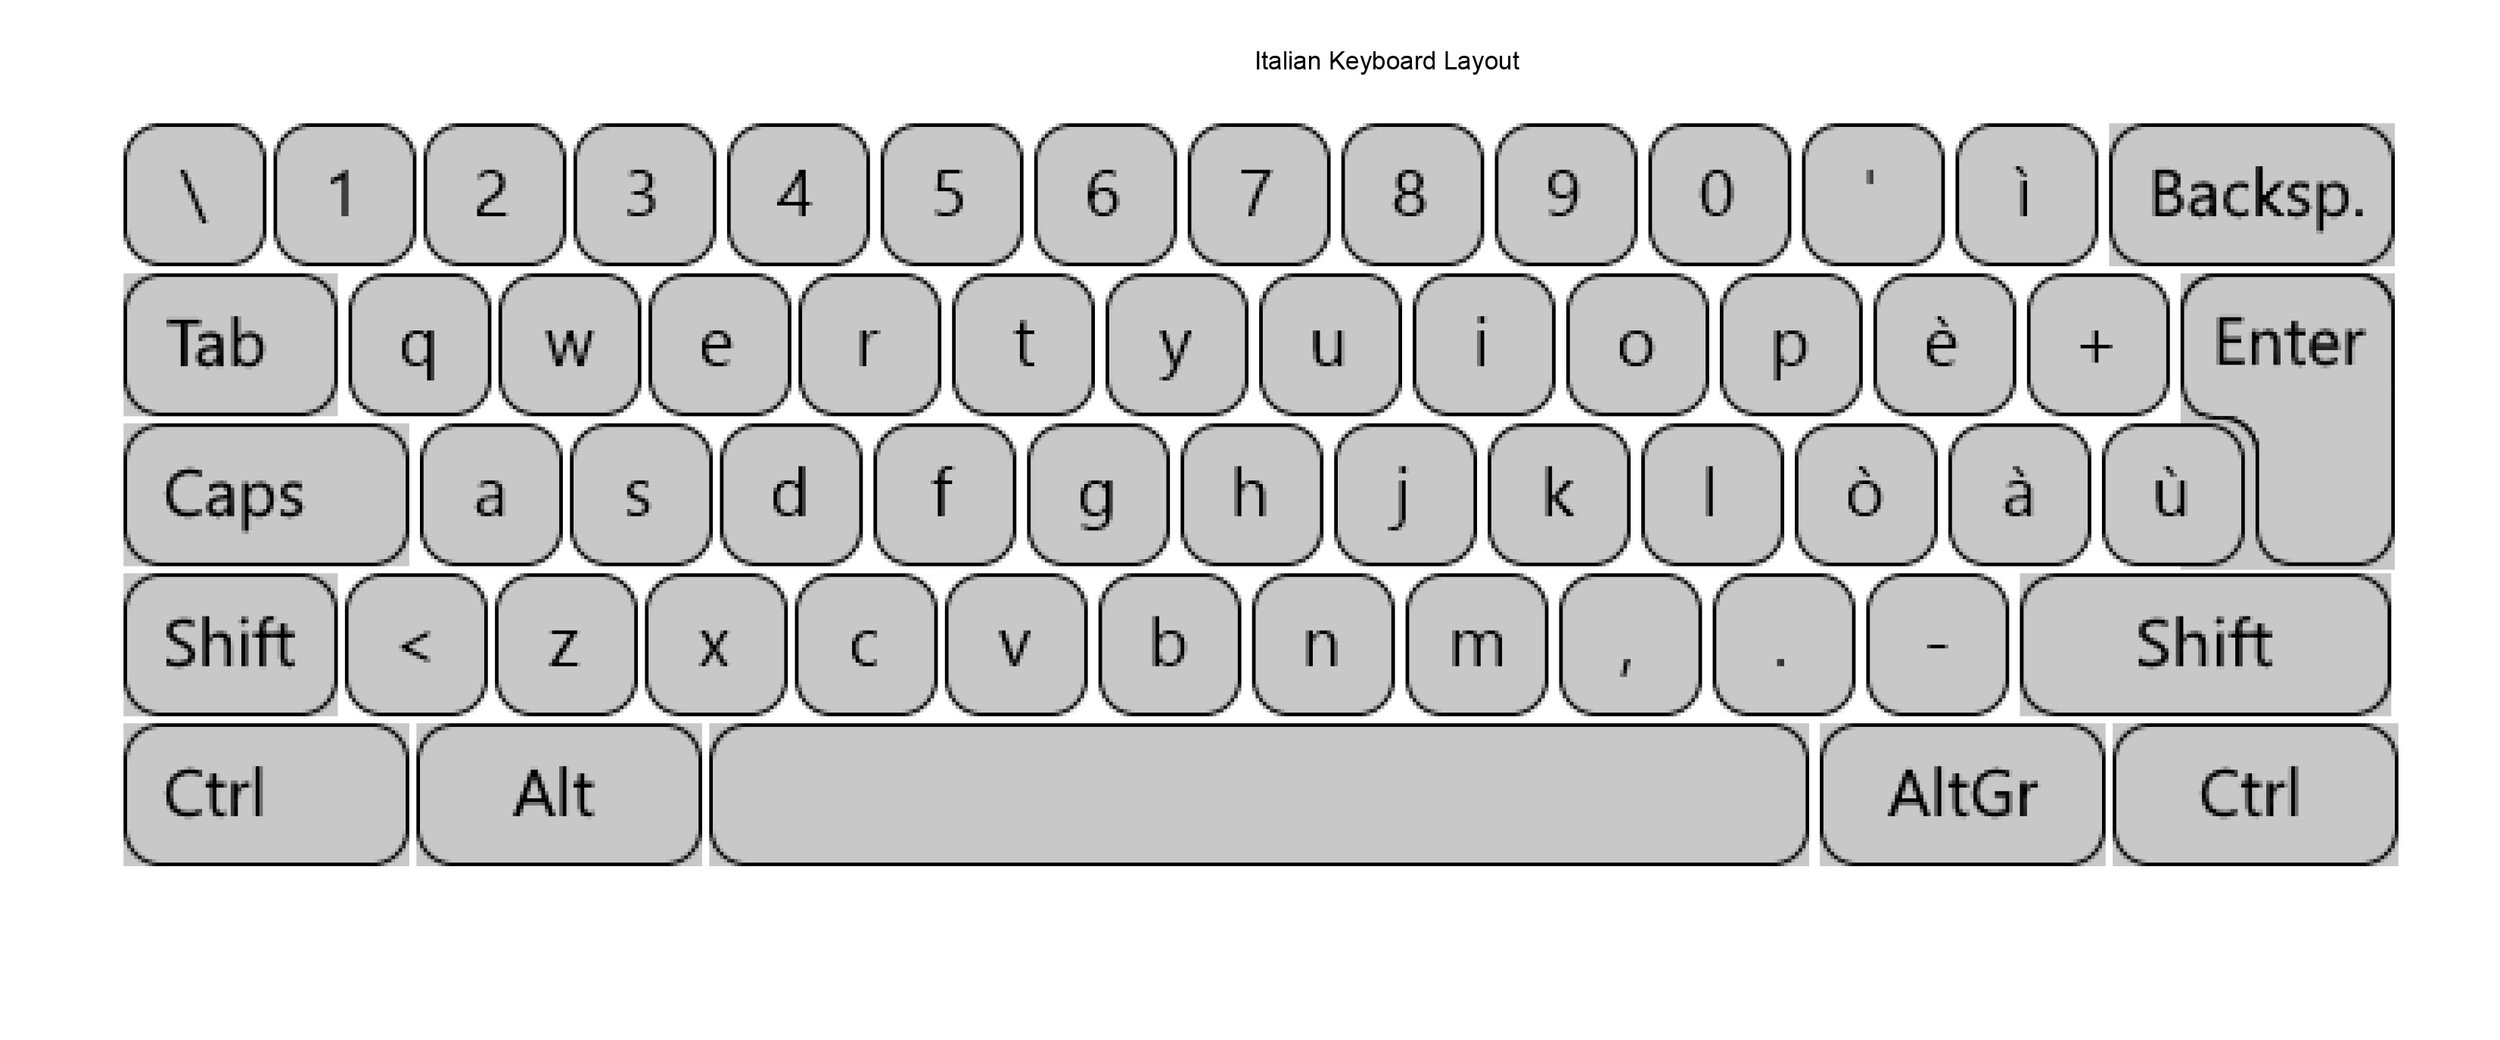 Italian Keyboard Layout - Microsoft